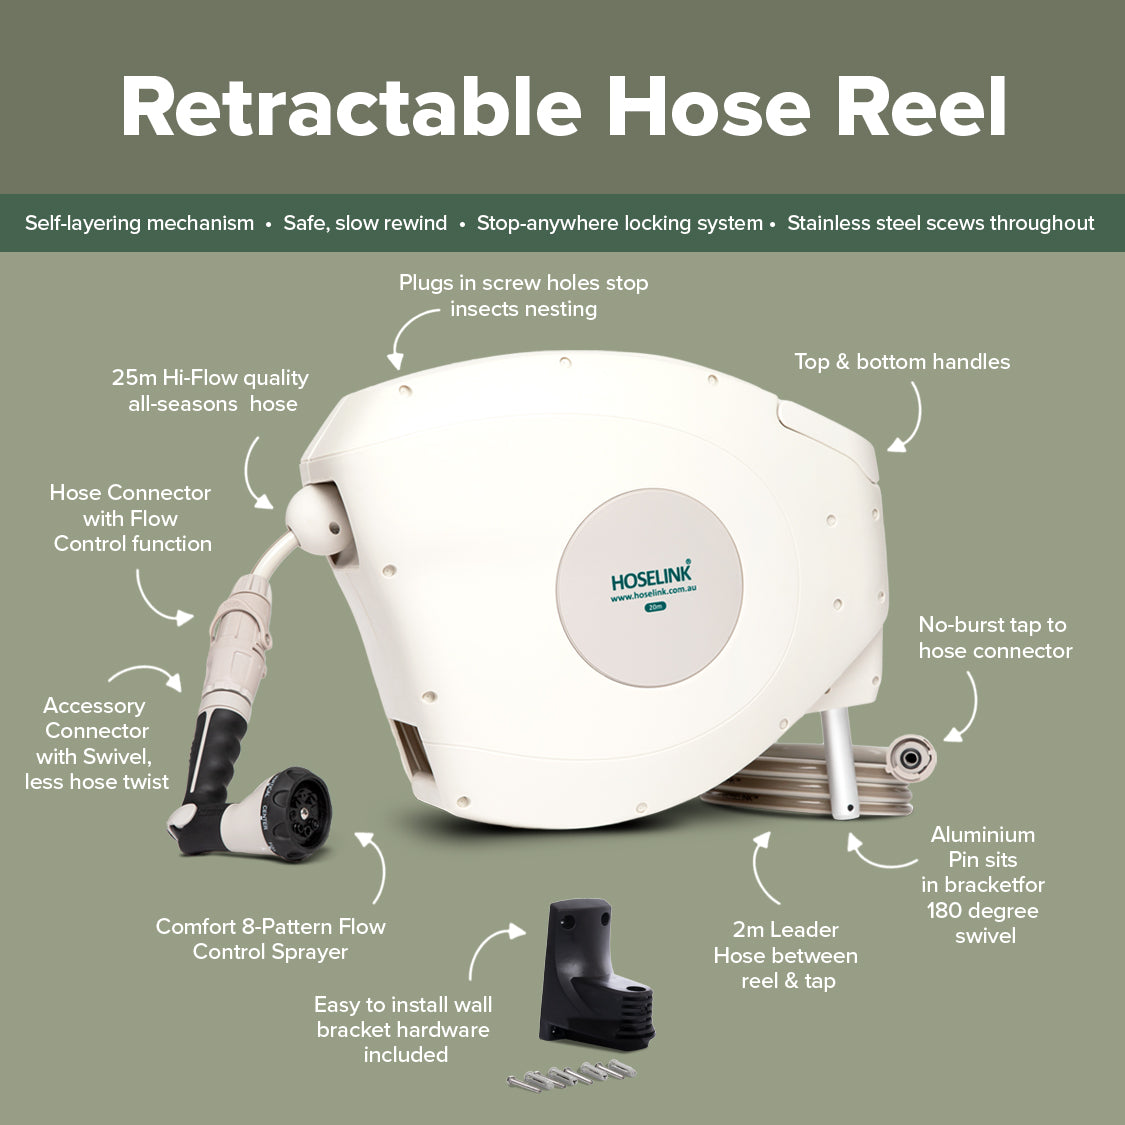 Hi-Flow 25m Retractable Hose Reel | Beige